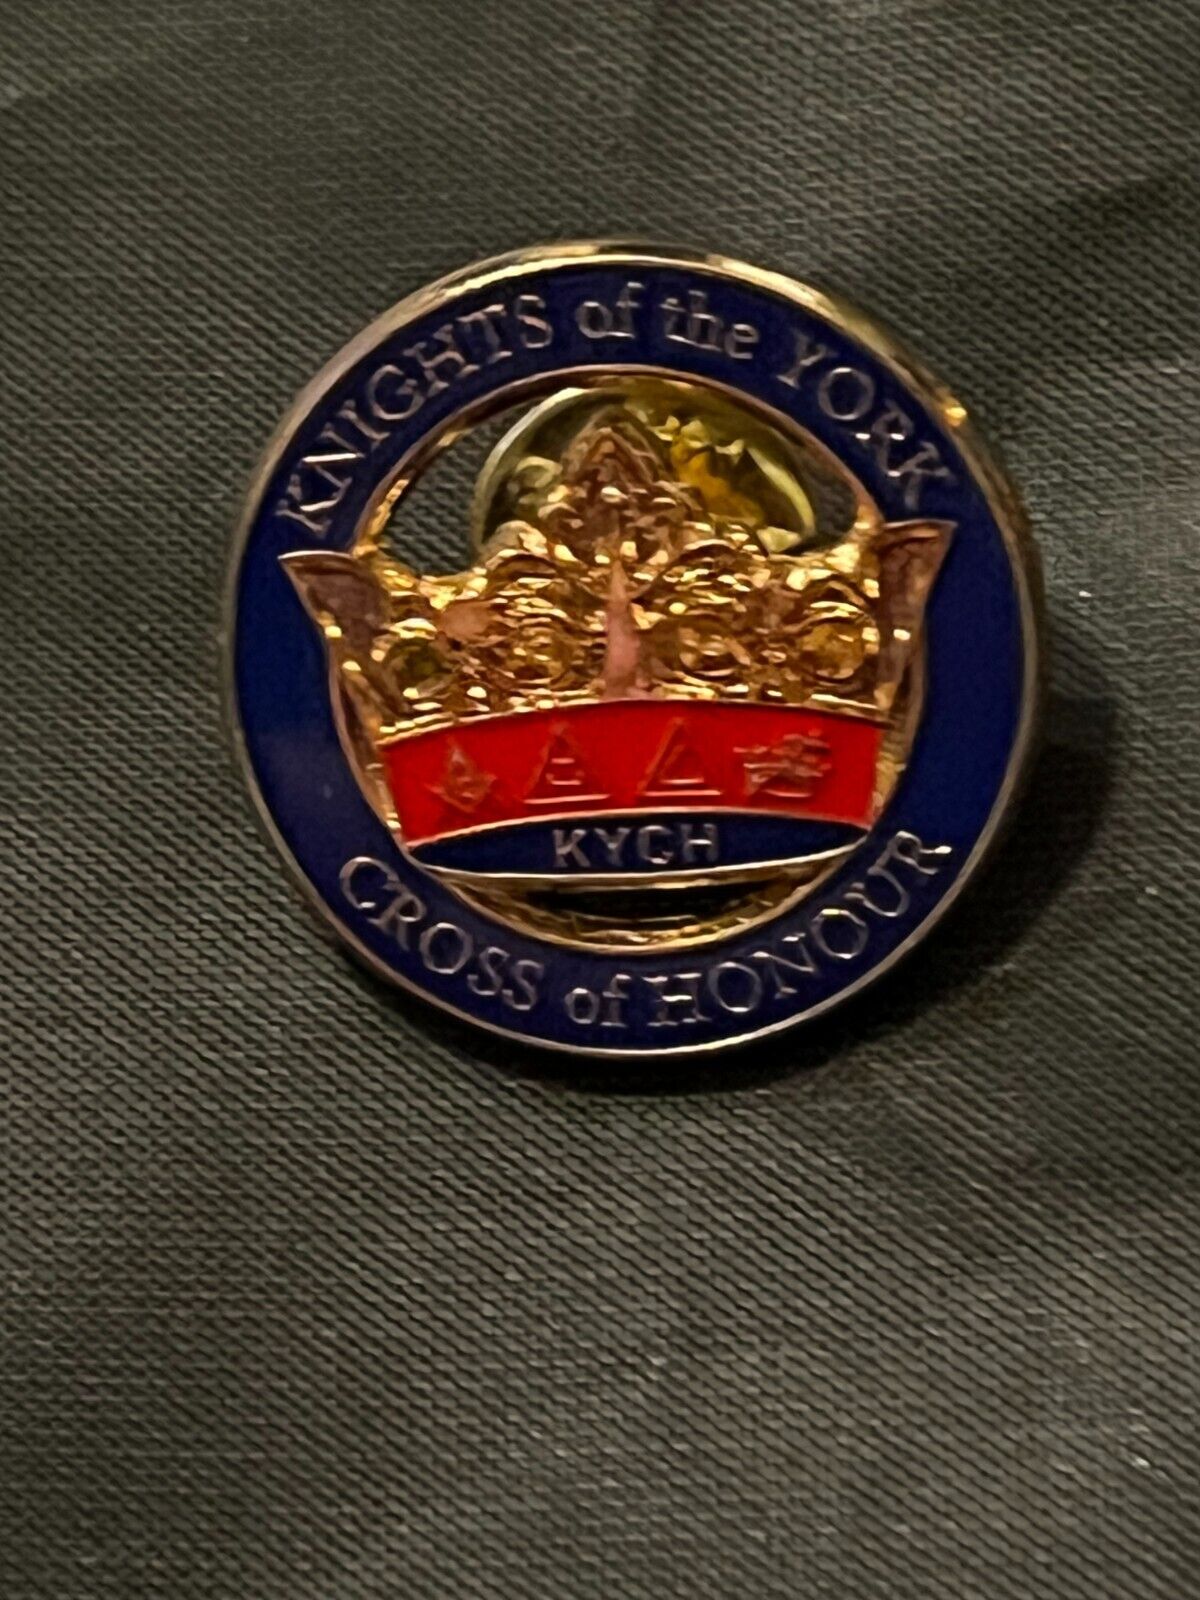 York Rites Masonic Lapel Tac Pin Crown KYCH Knights York Cross Honour NEW